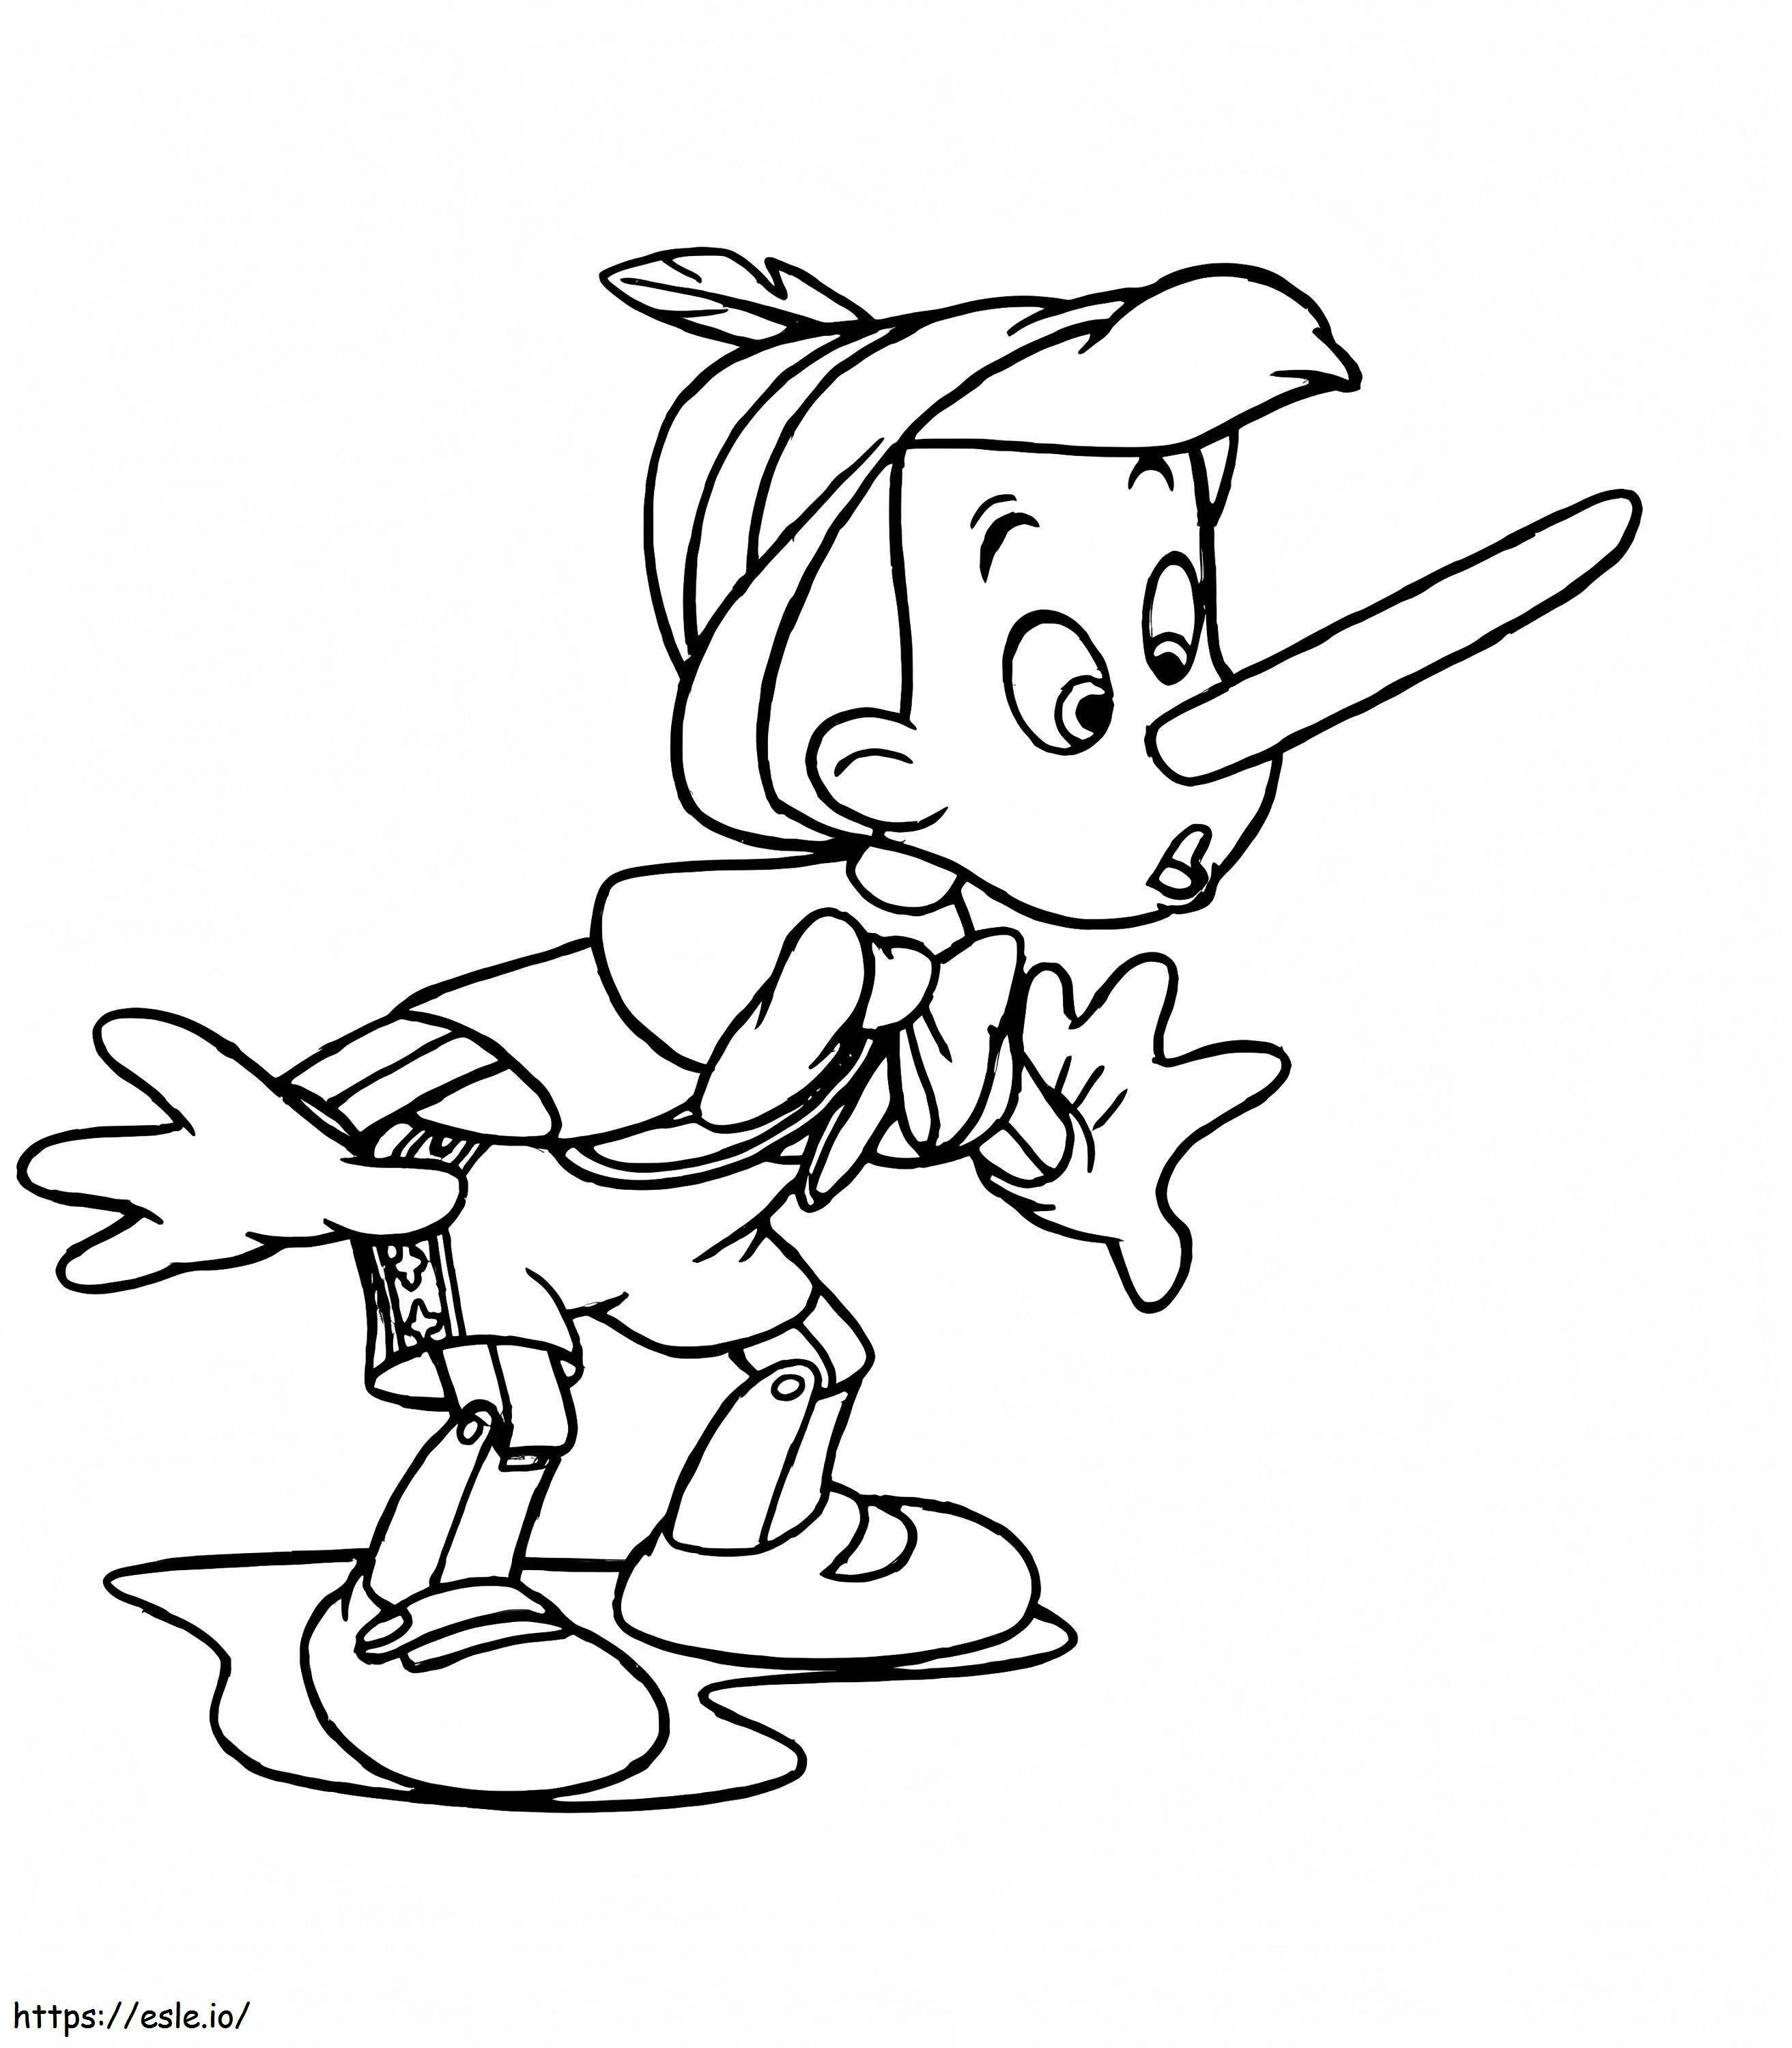 Pinocchio lügt ausmalbilder